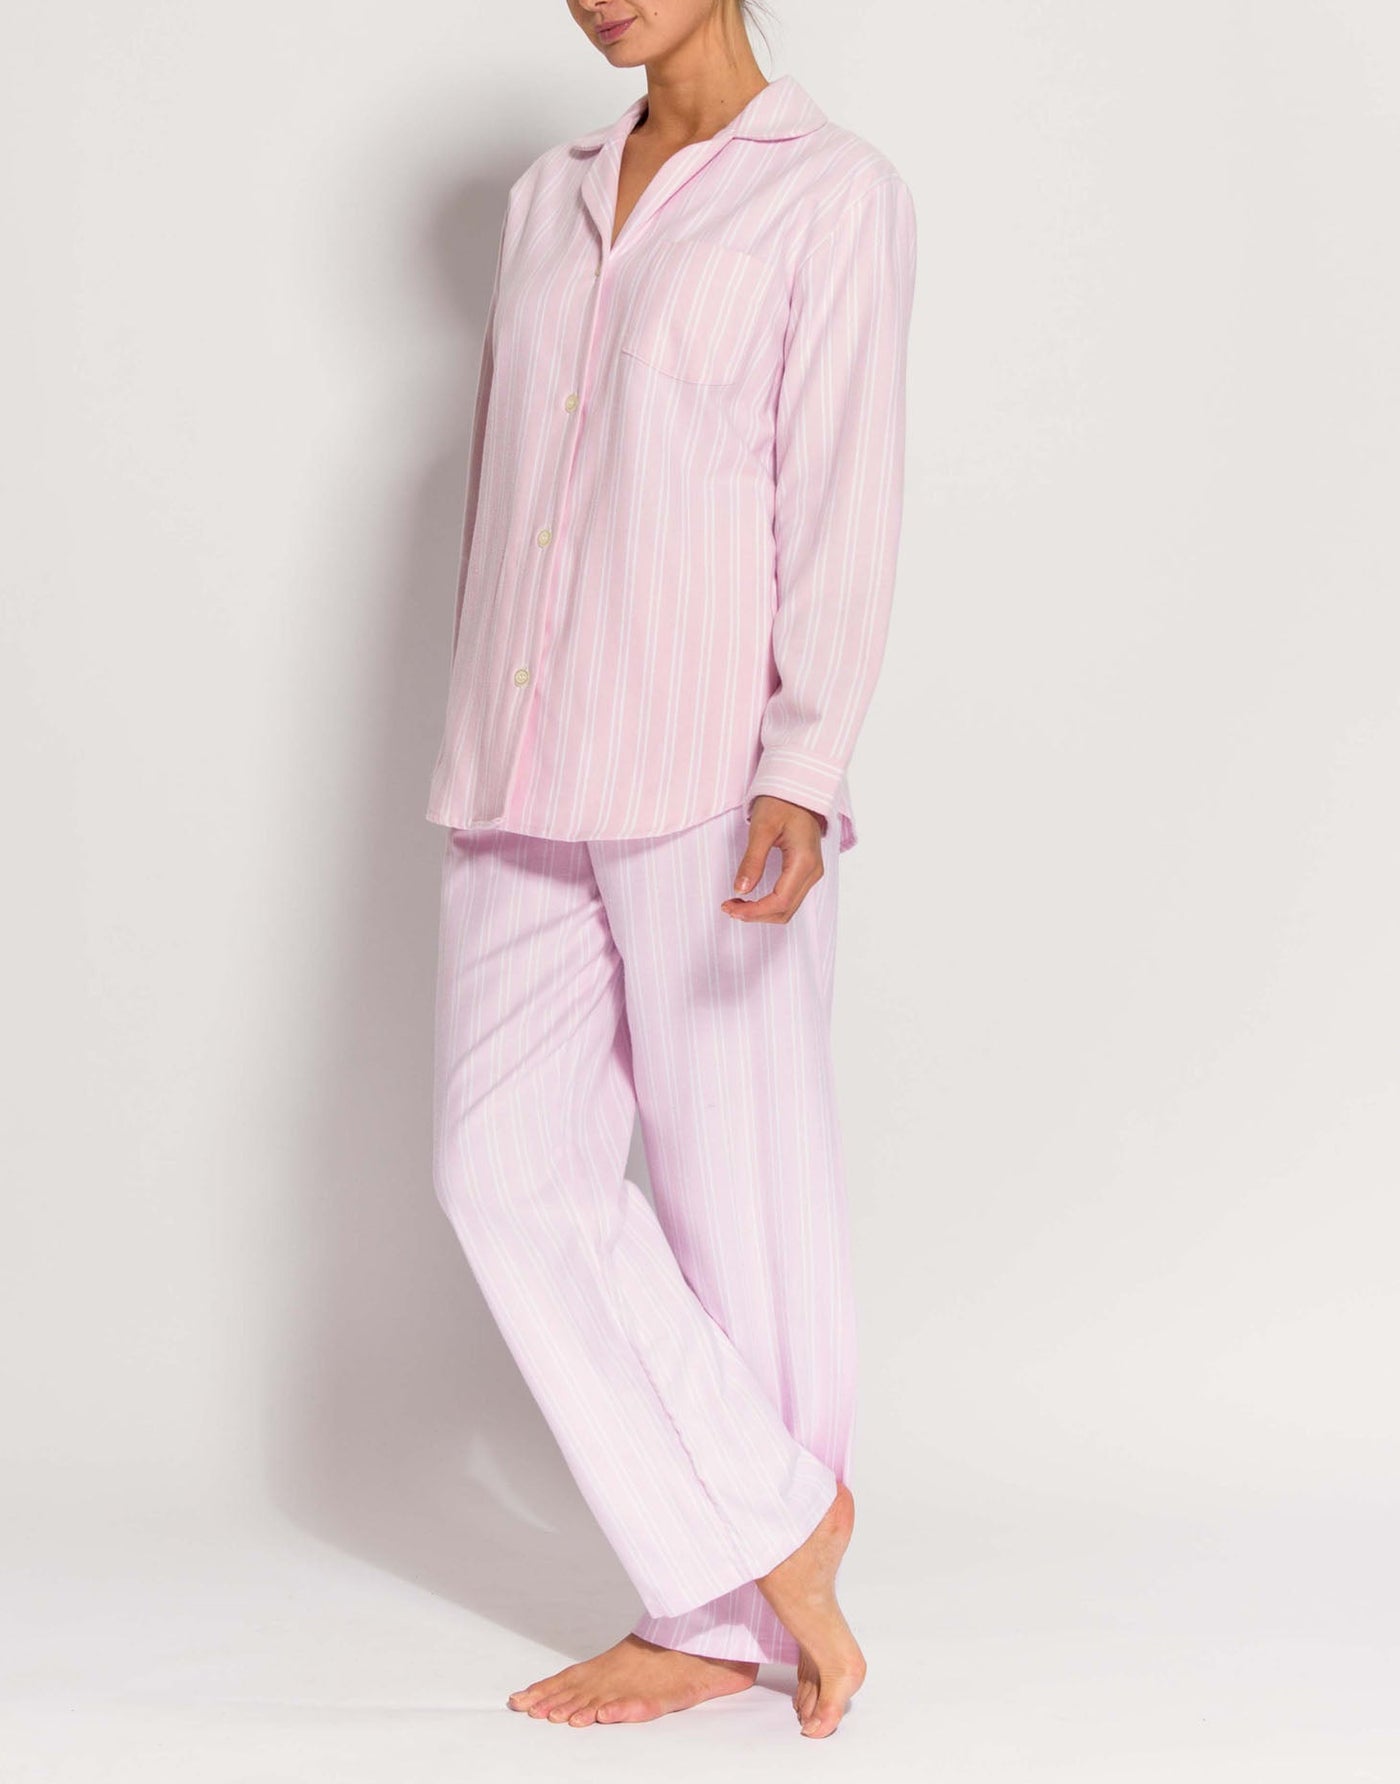 Girls Pyjamas in Brushed Cotton Bright Pink Check - The Pyjama House